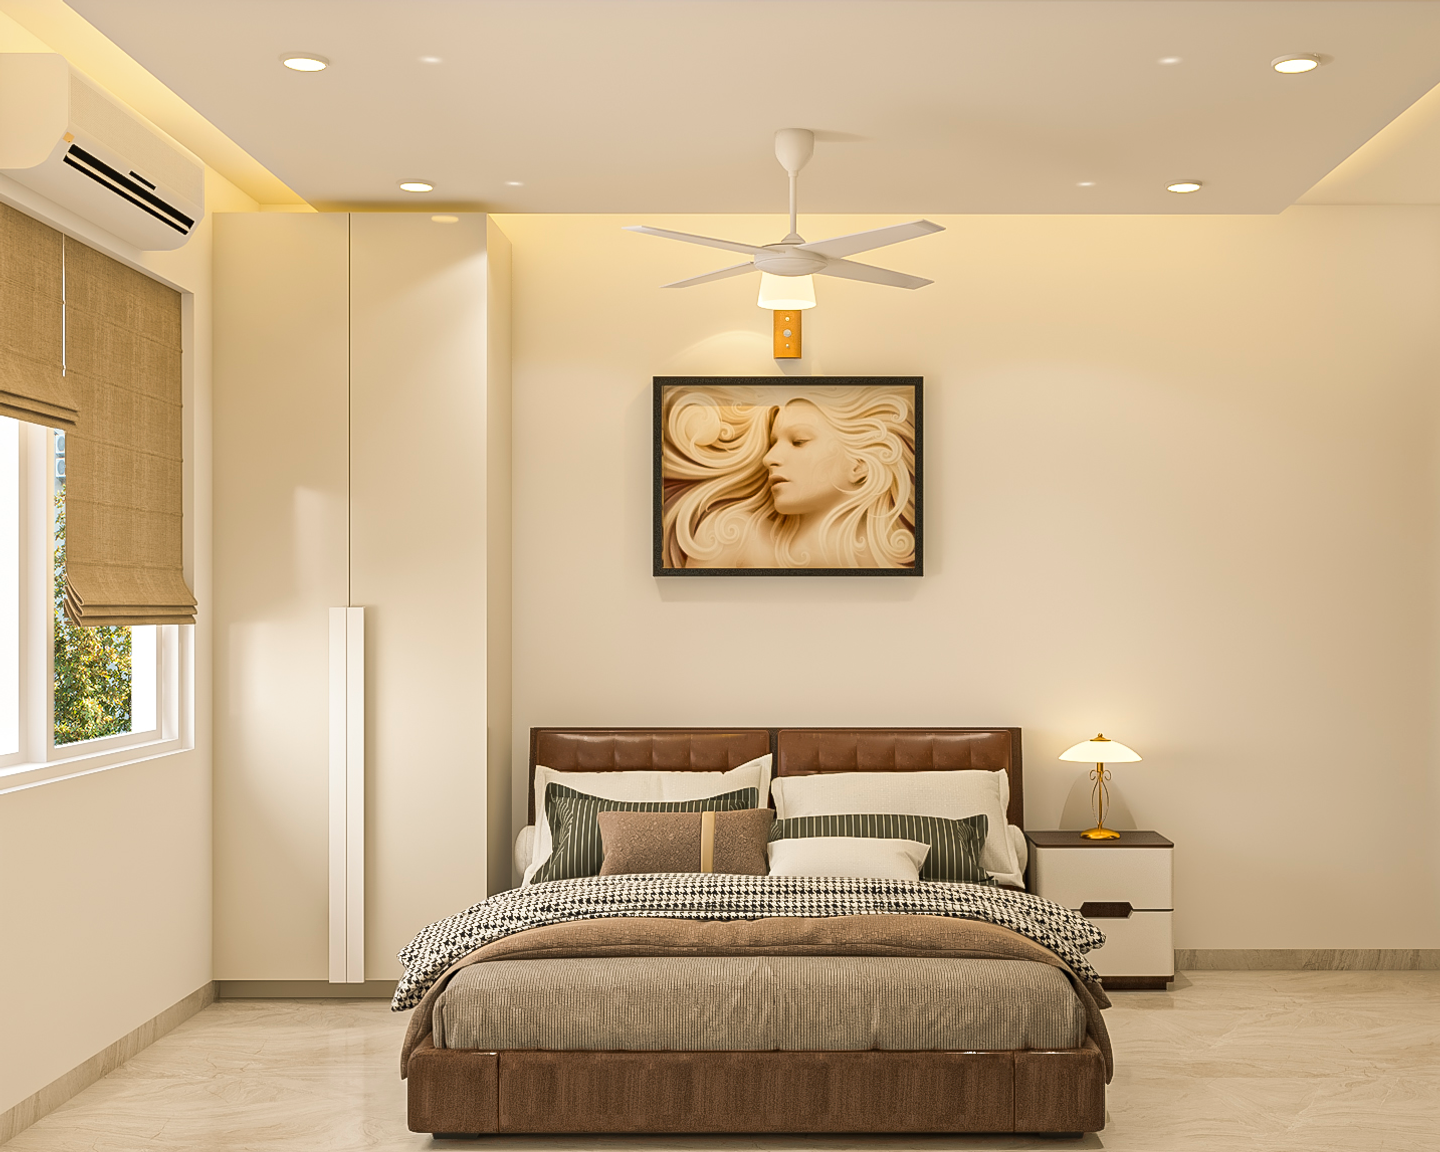 Master Bedroom Design With Creamy Walls - Livspace